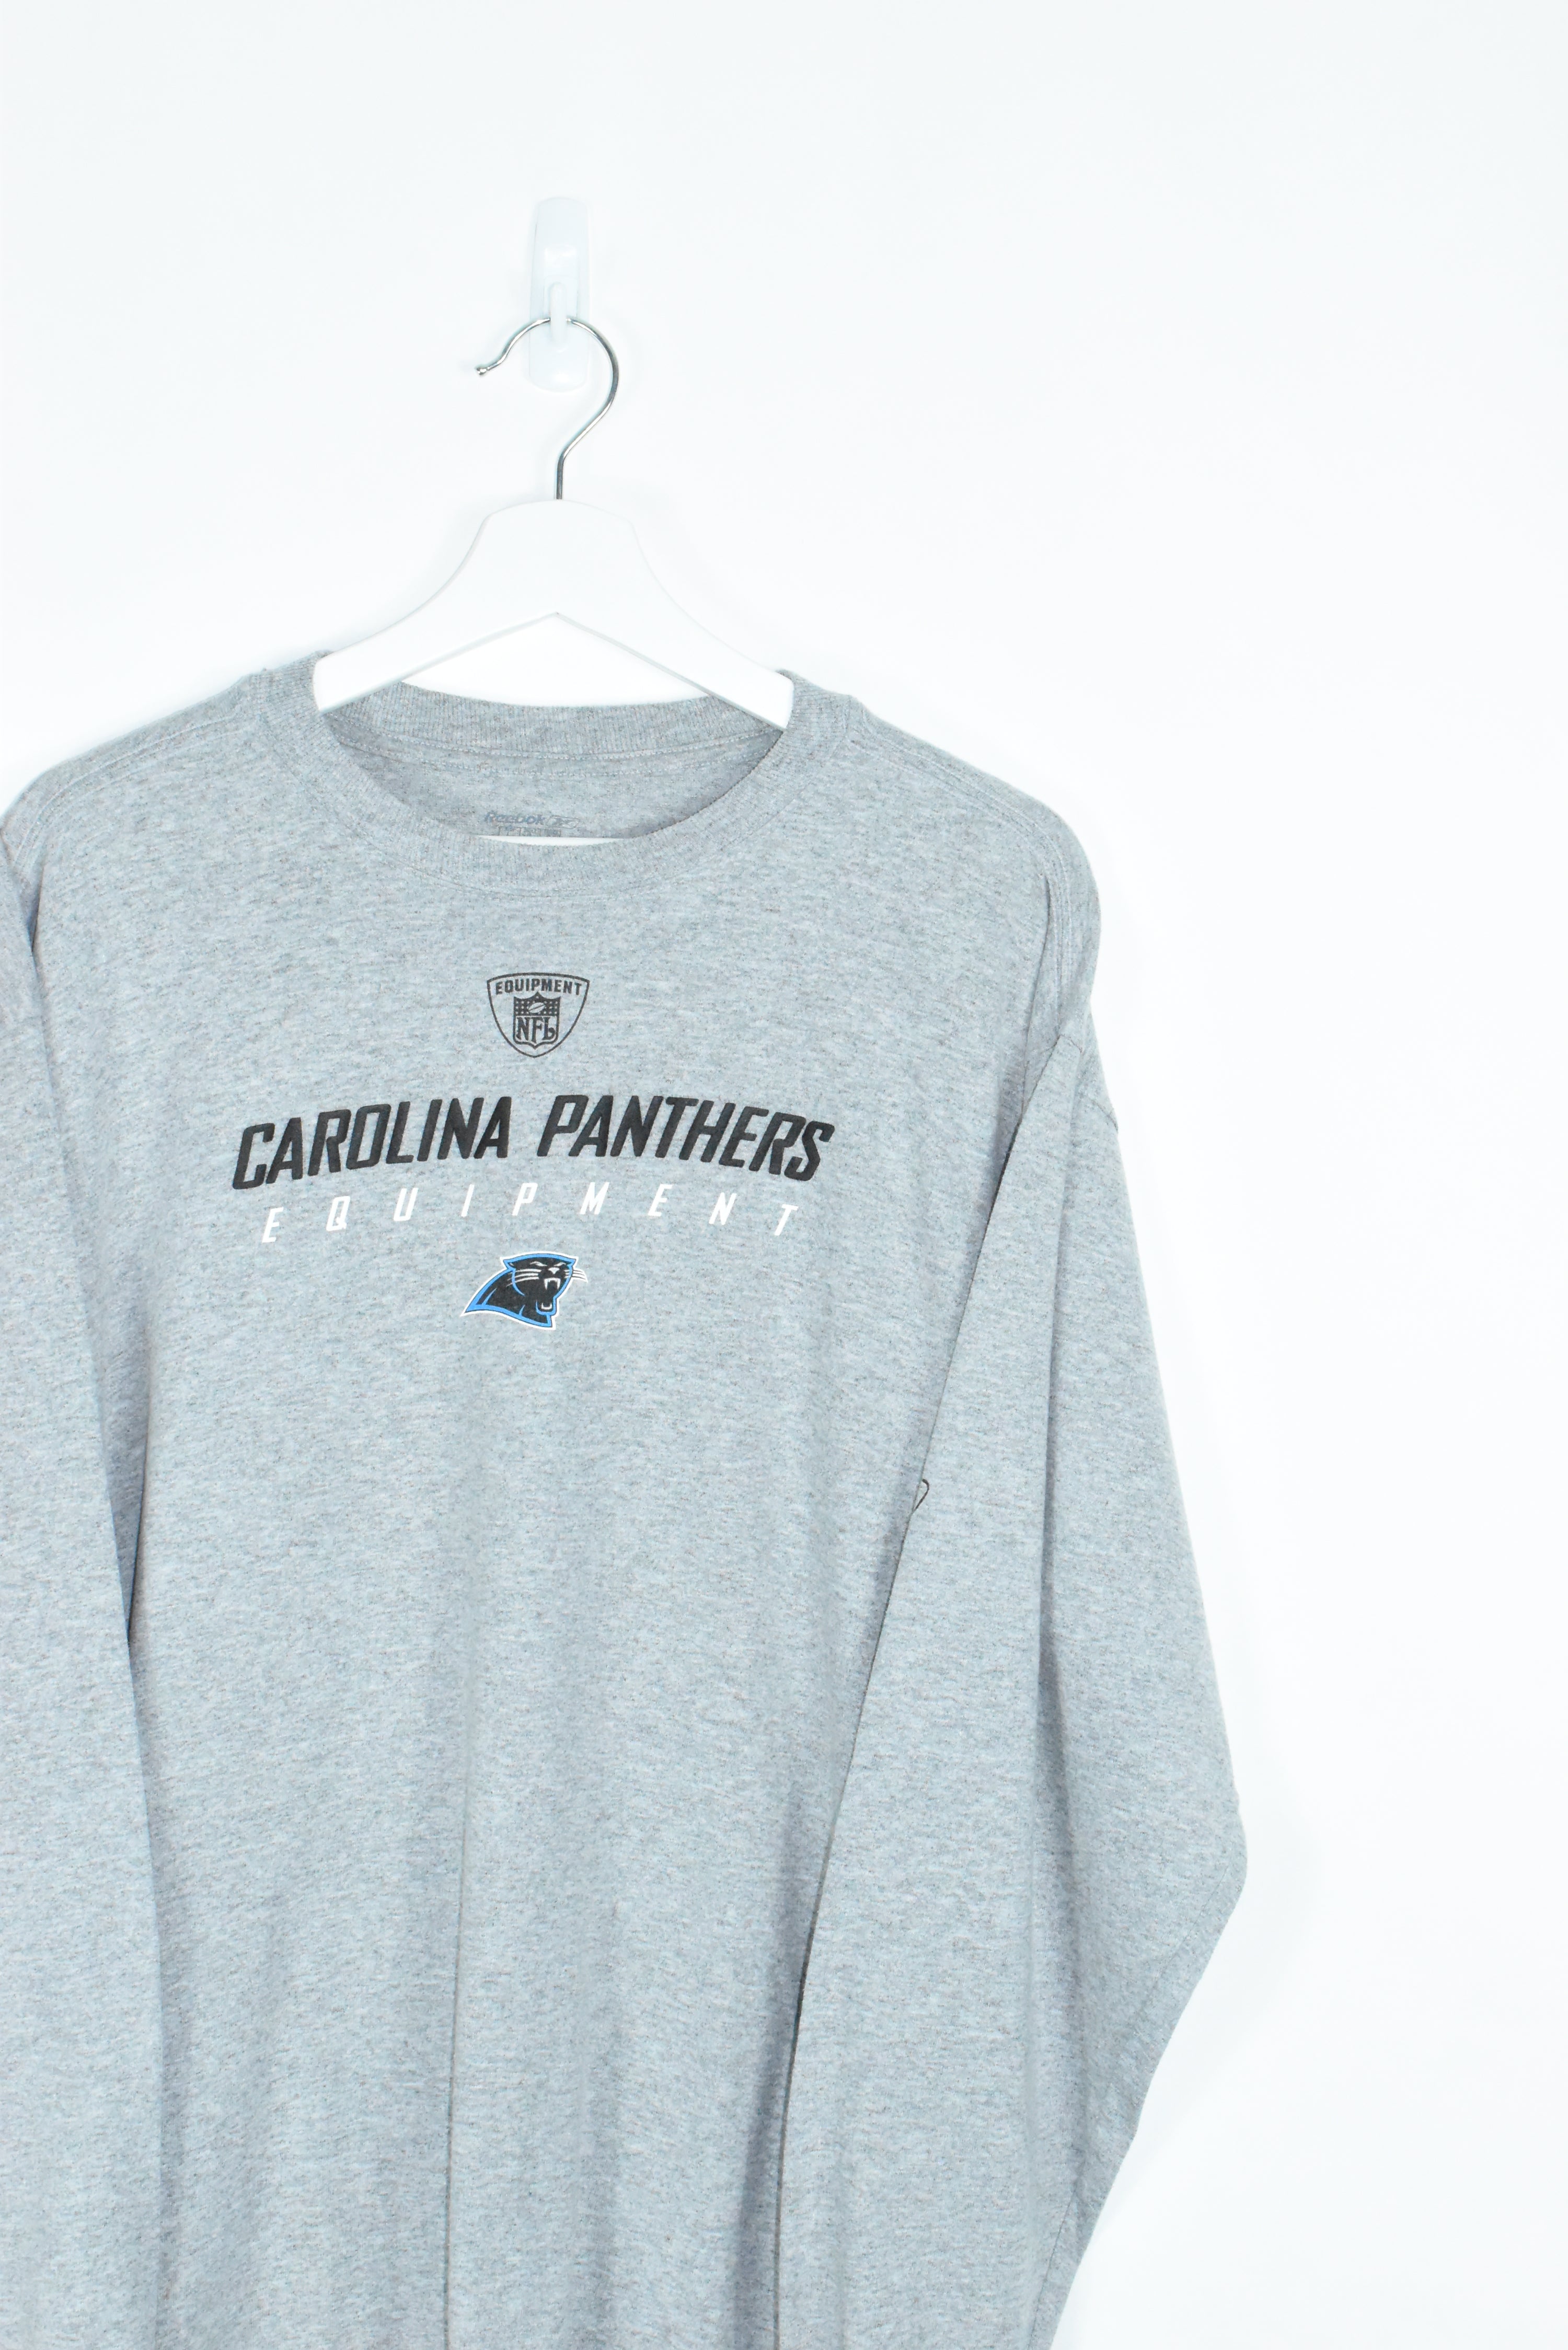 Vintage Reebok Carolina Panthers Embroidery Long Sleeve LARGE /XL